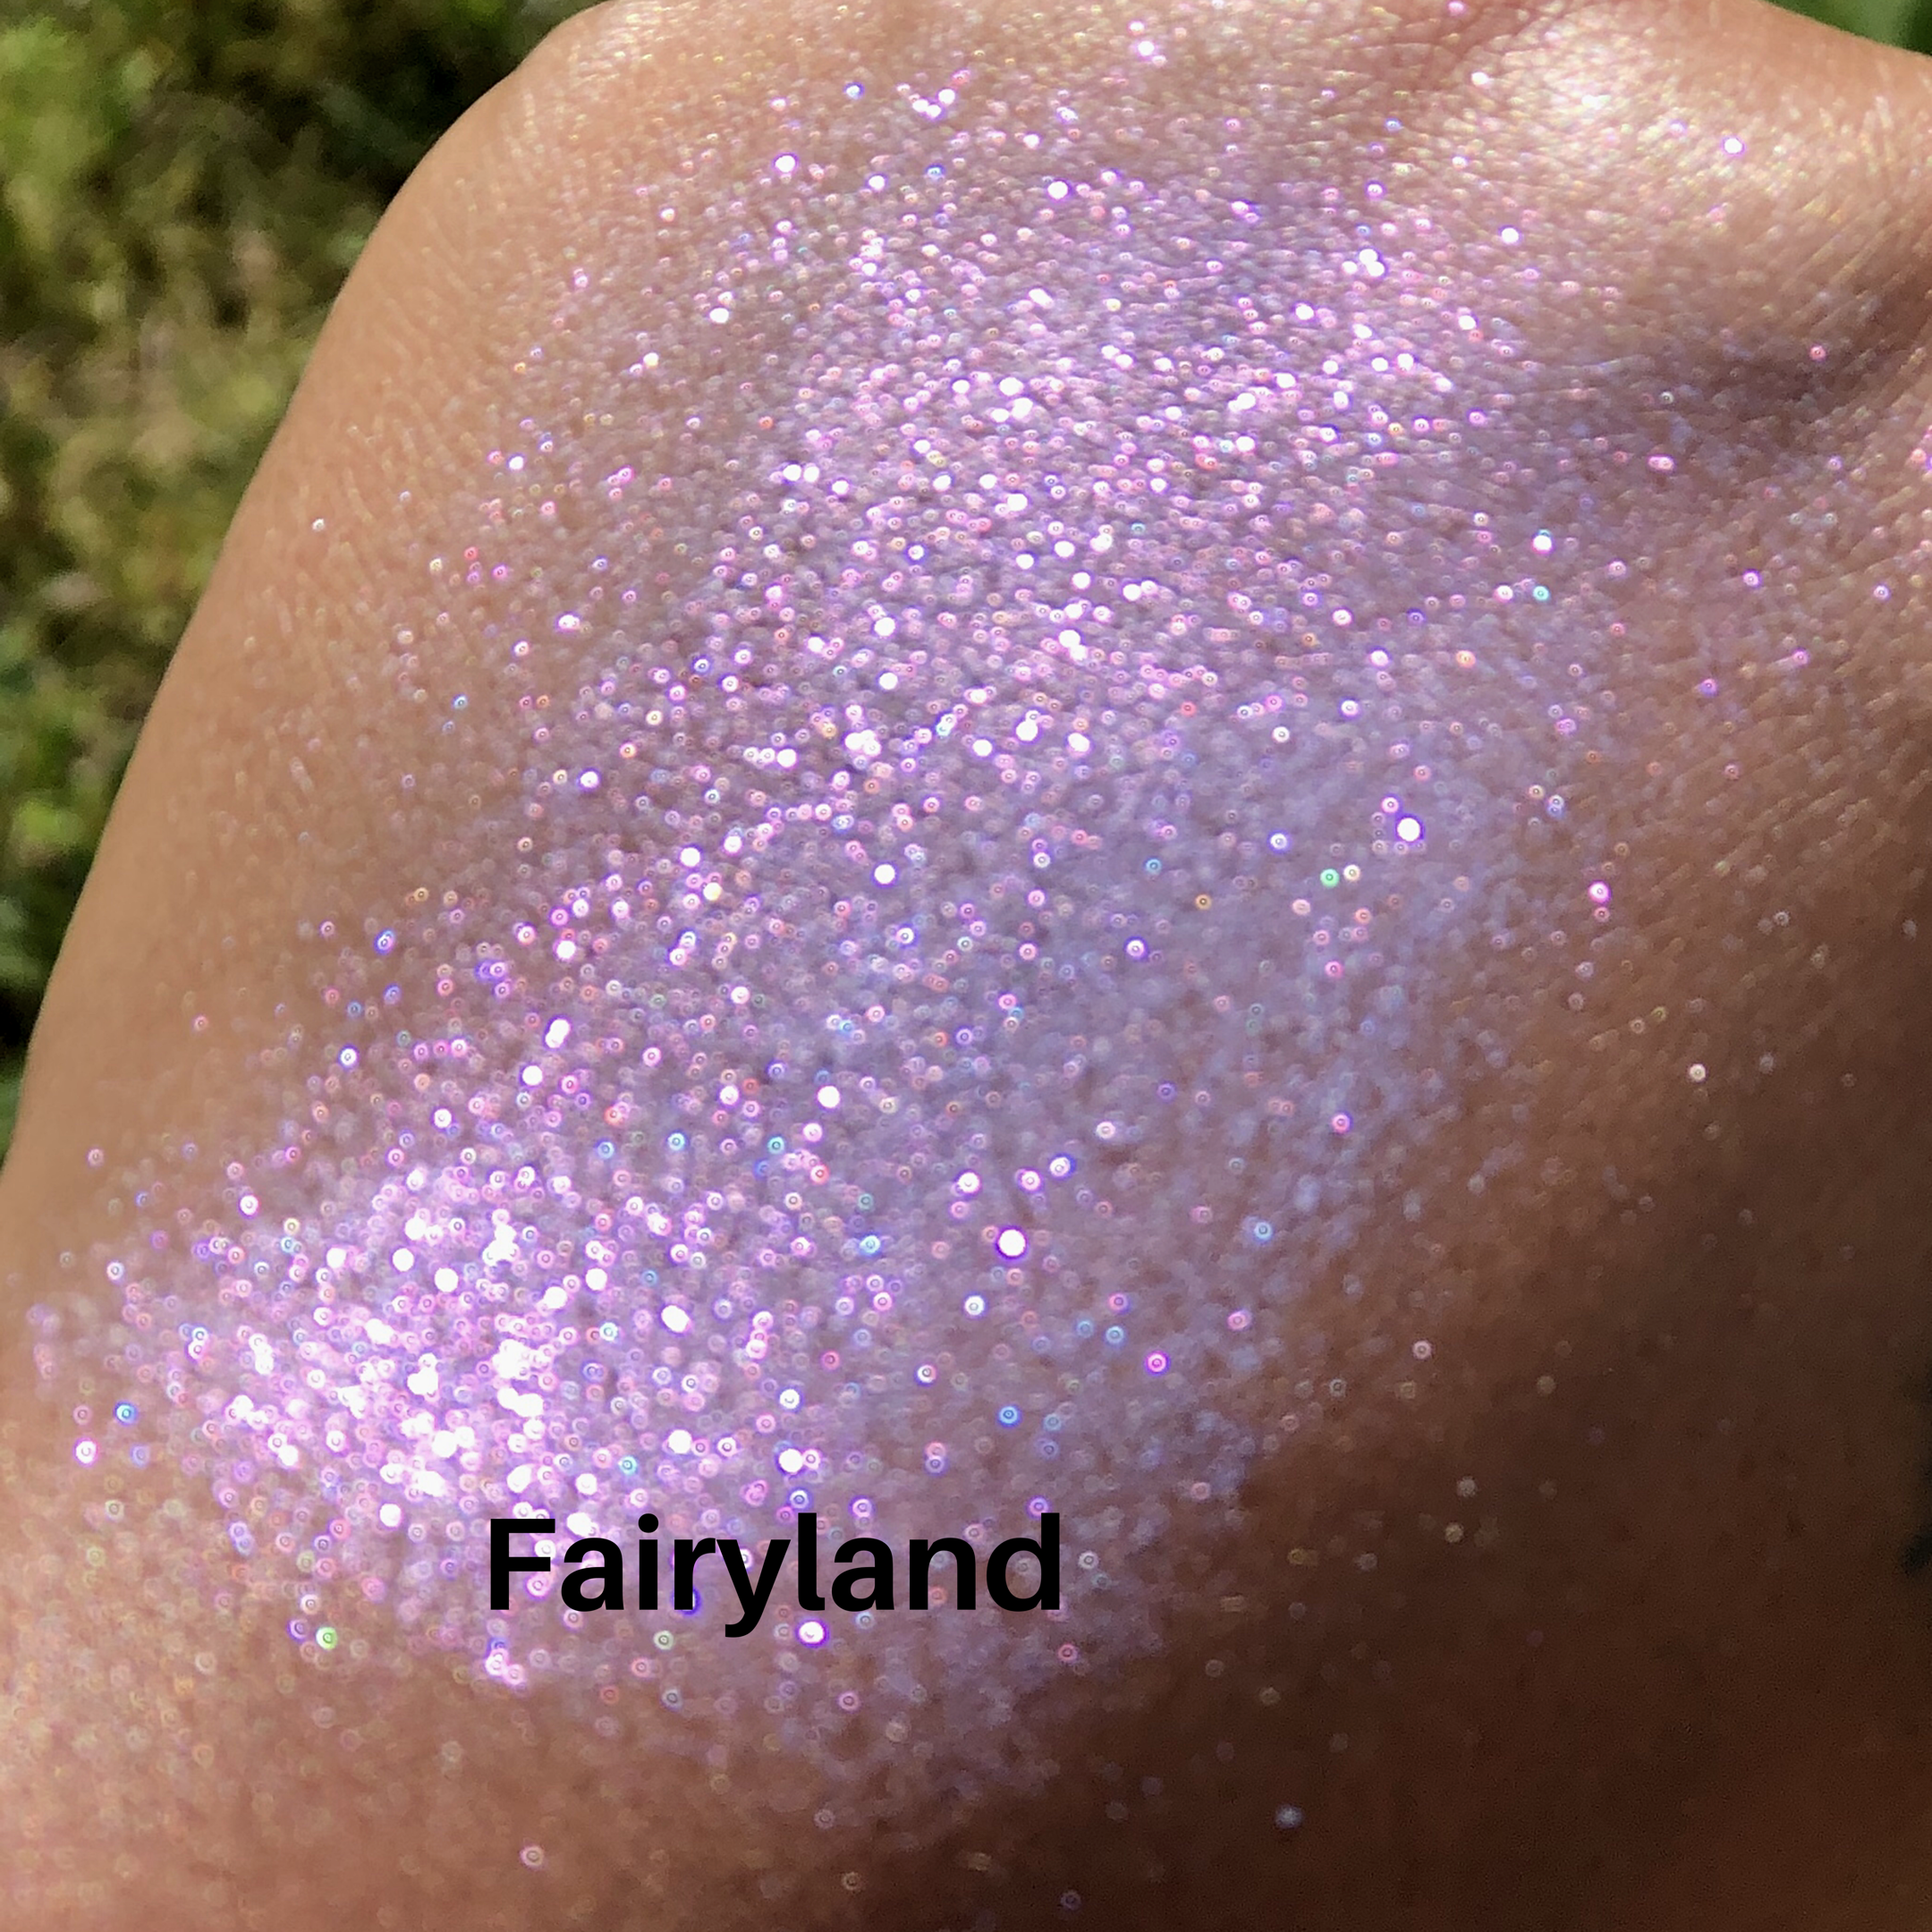 Fairyland [Primavera Crystal]